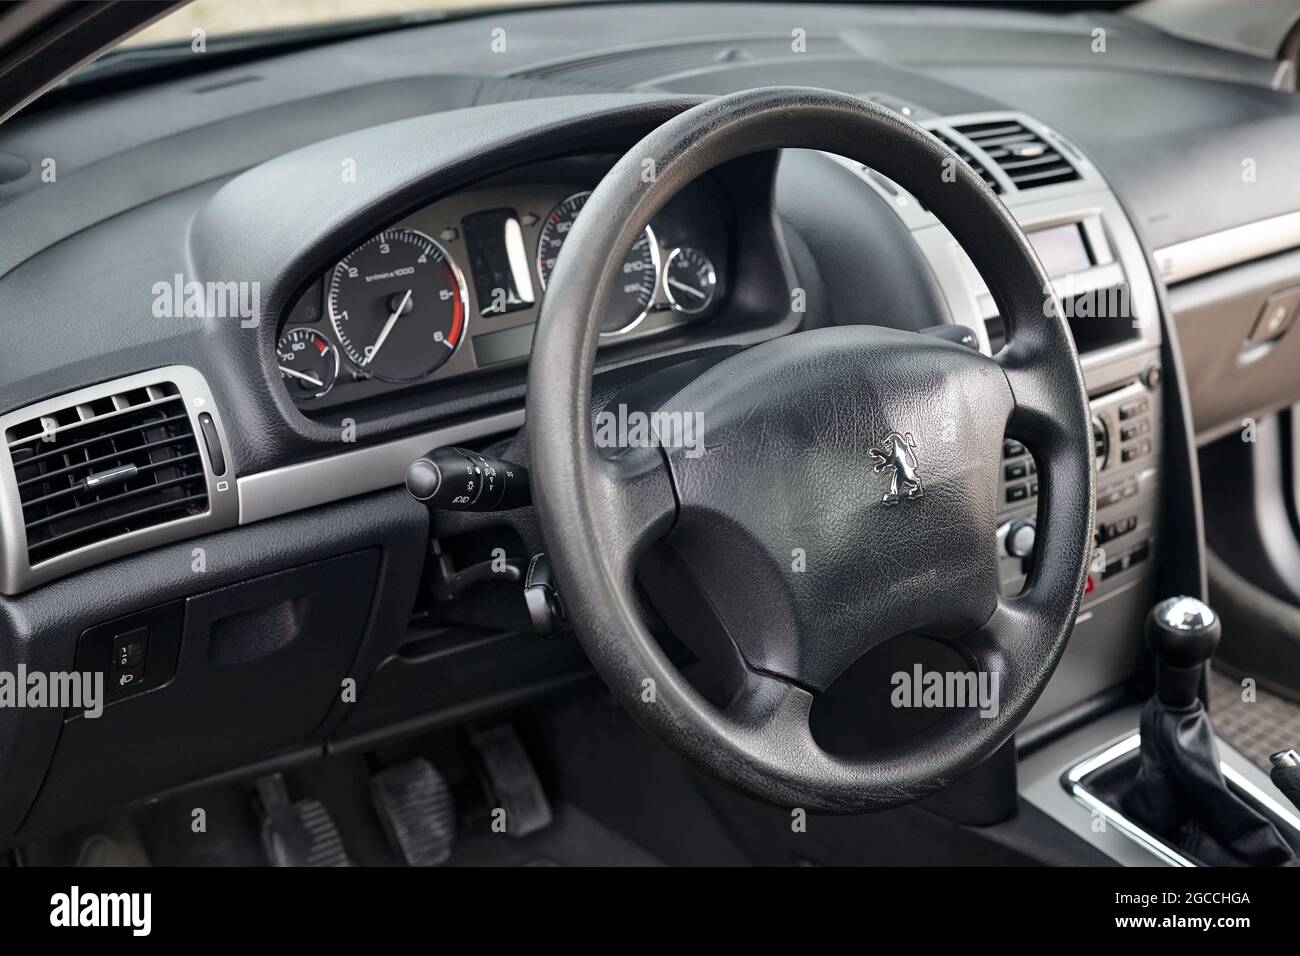 58 imágenes, fotos de stock, objetos en 3D y vectores sobre Peugeot 407